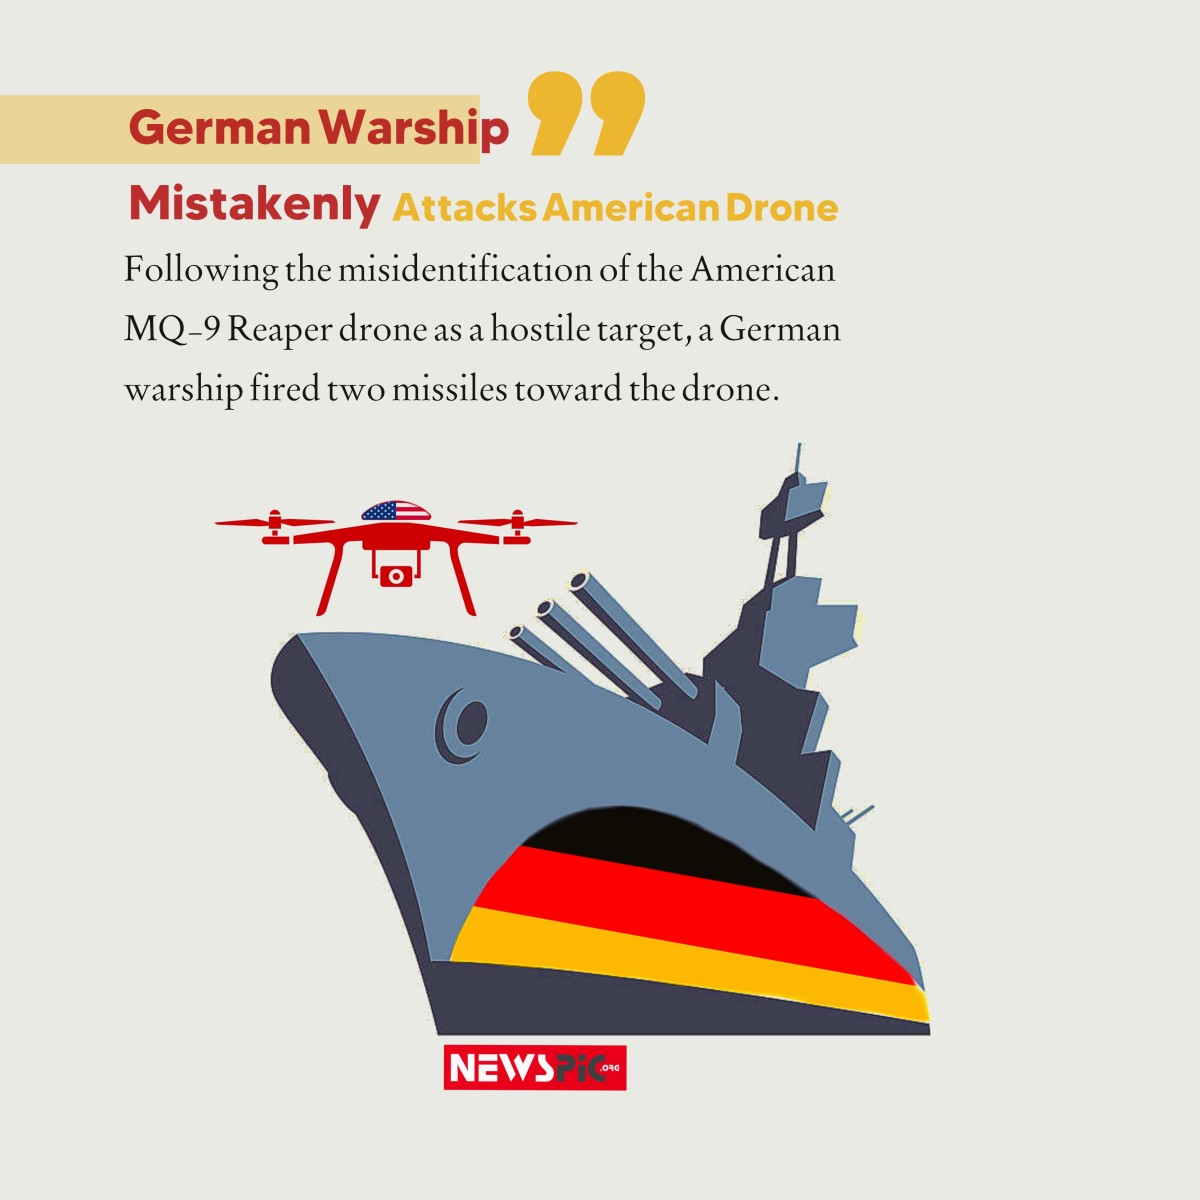 German Warship Mistakenly Attacks American Drone